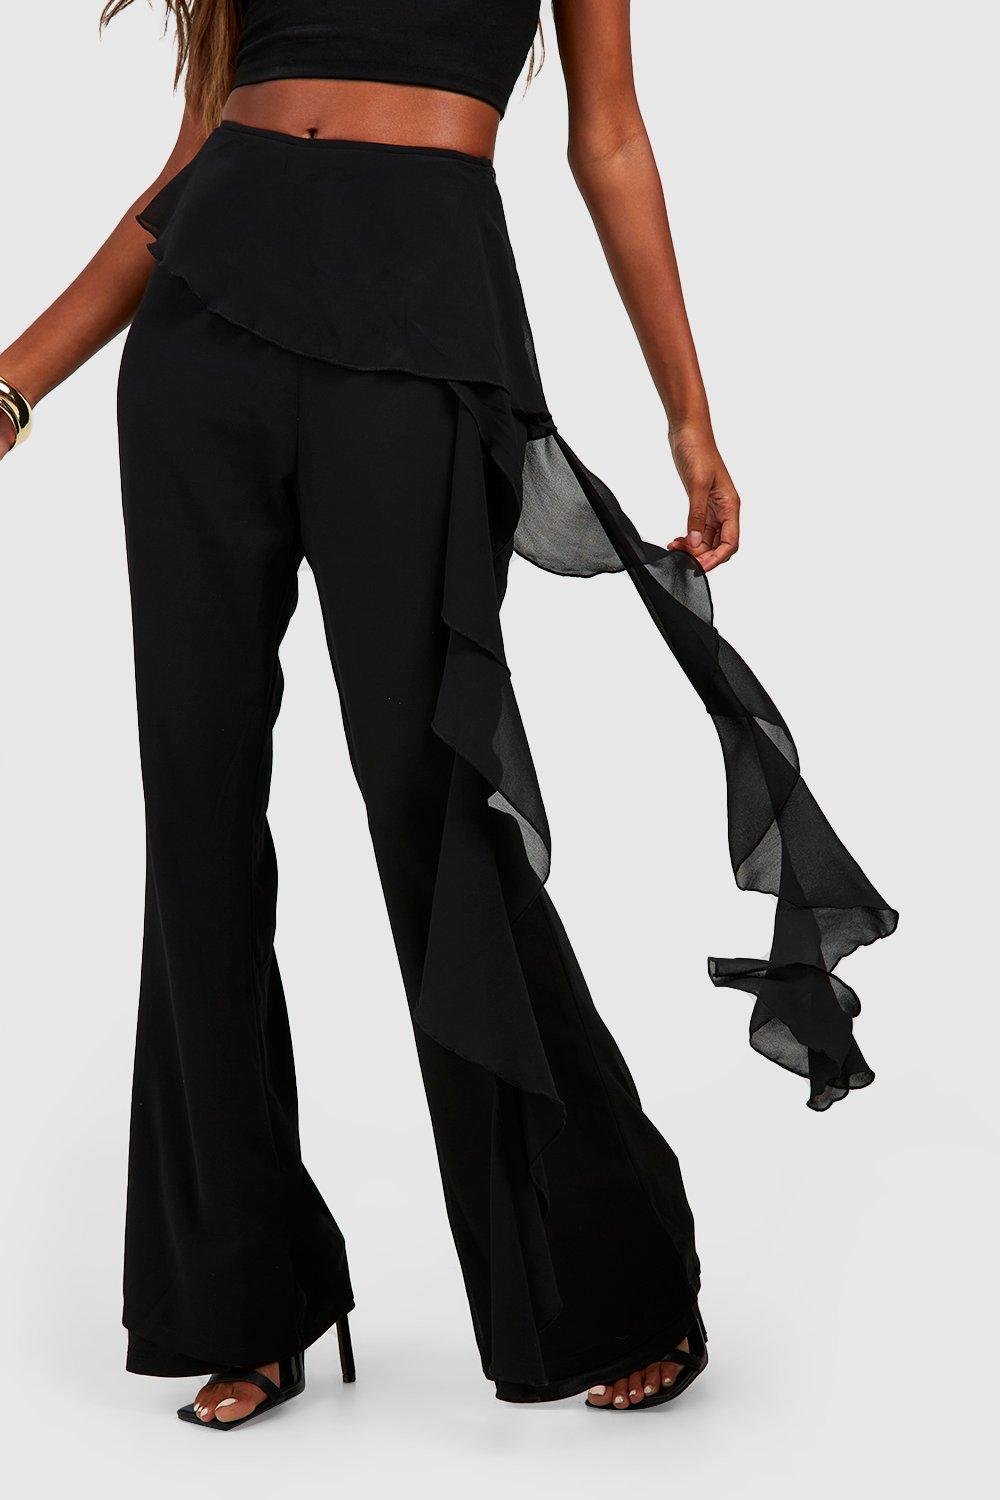 GUOLEZEEV Womens High Waisted Ruffle Tier Flare Cut Bell Bottoms Wide Leg  Pants Black S at  Women's Clothing store